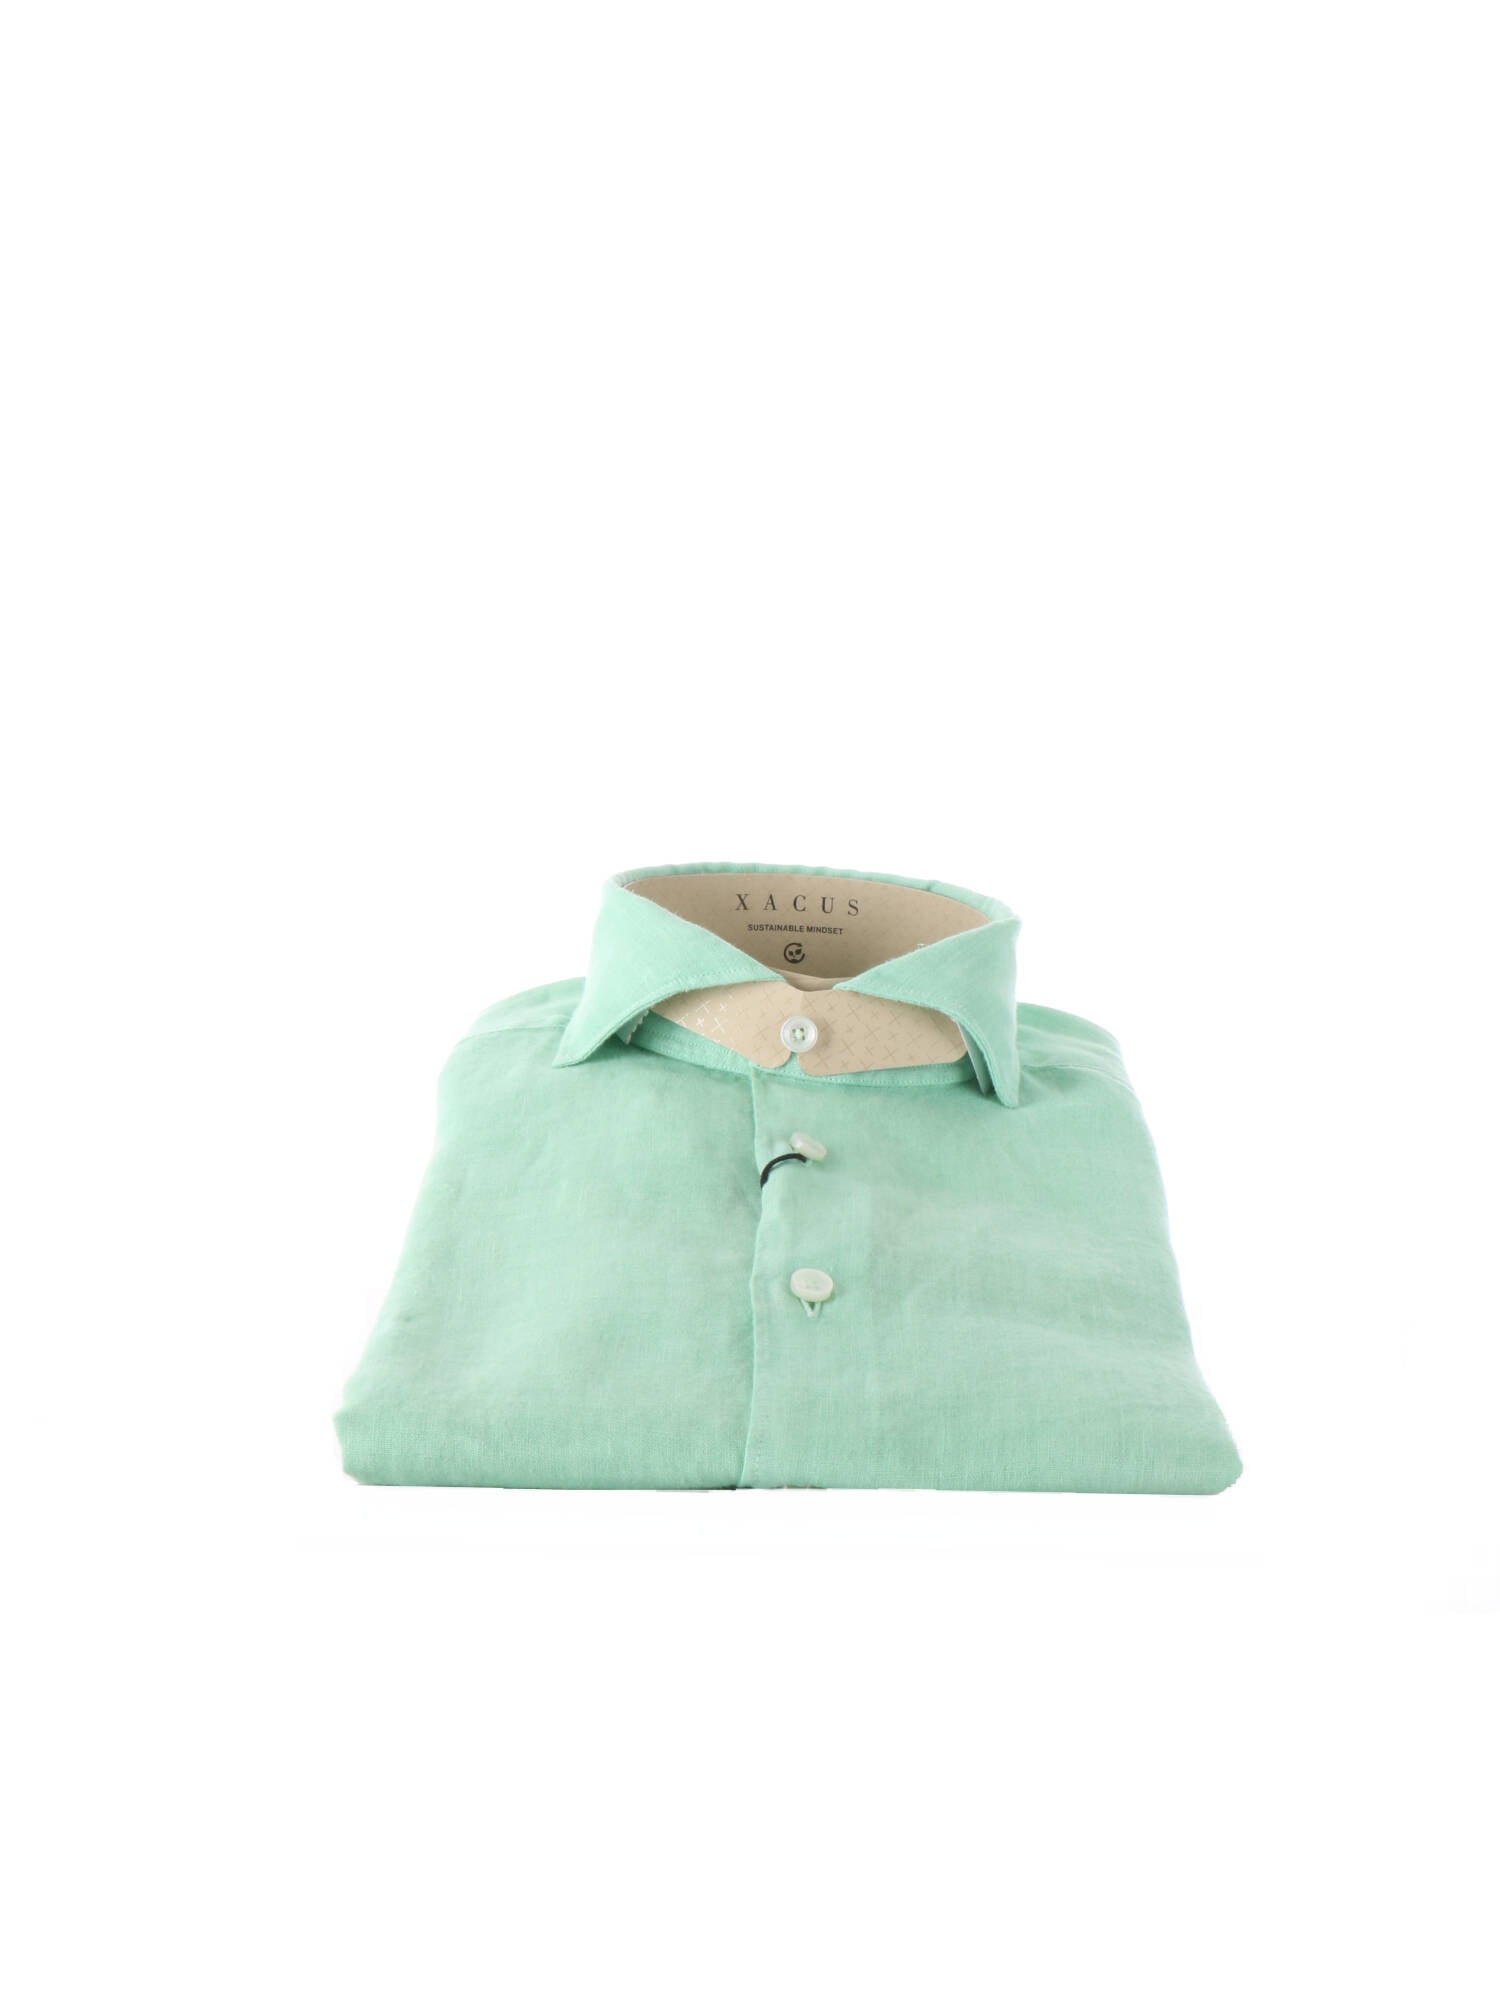 Xacus camicia verde in lino